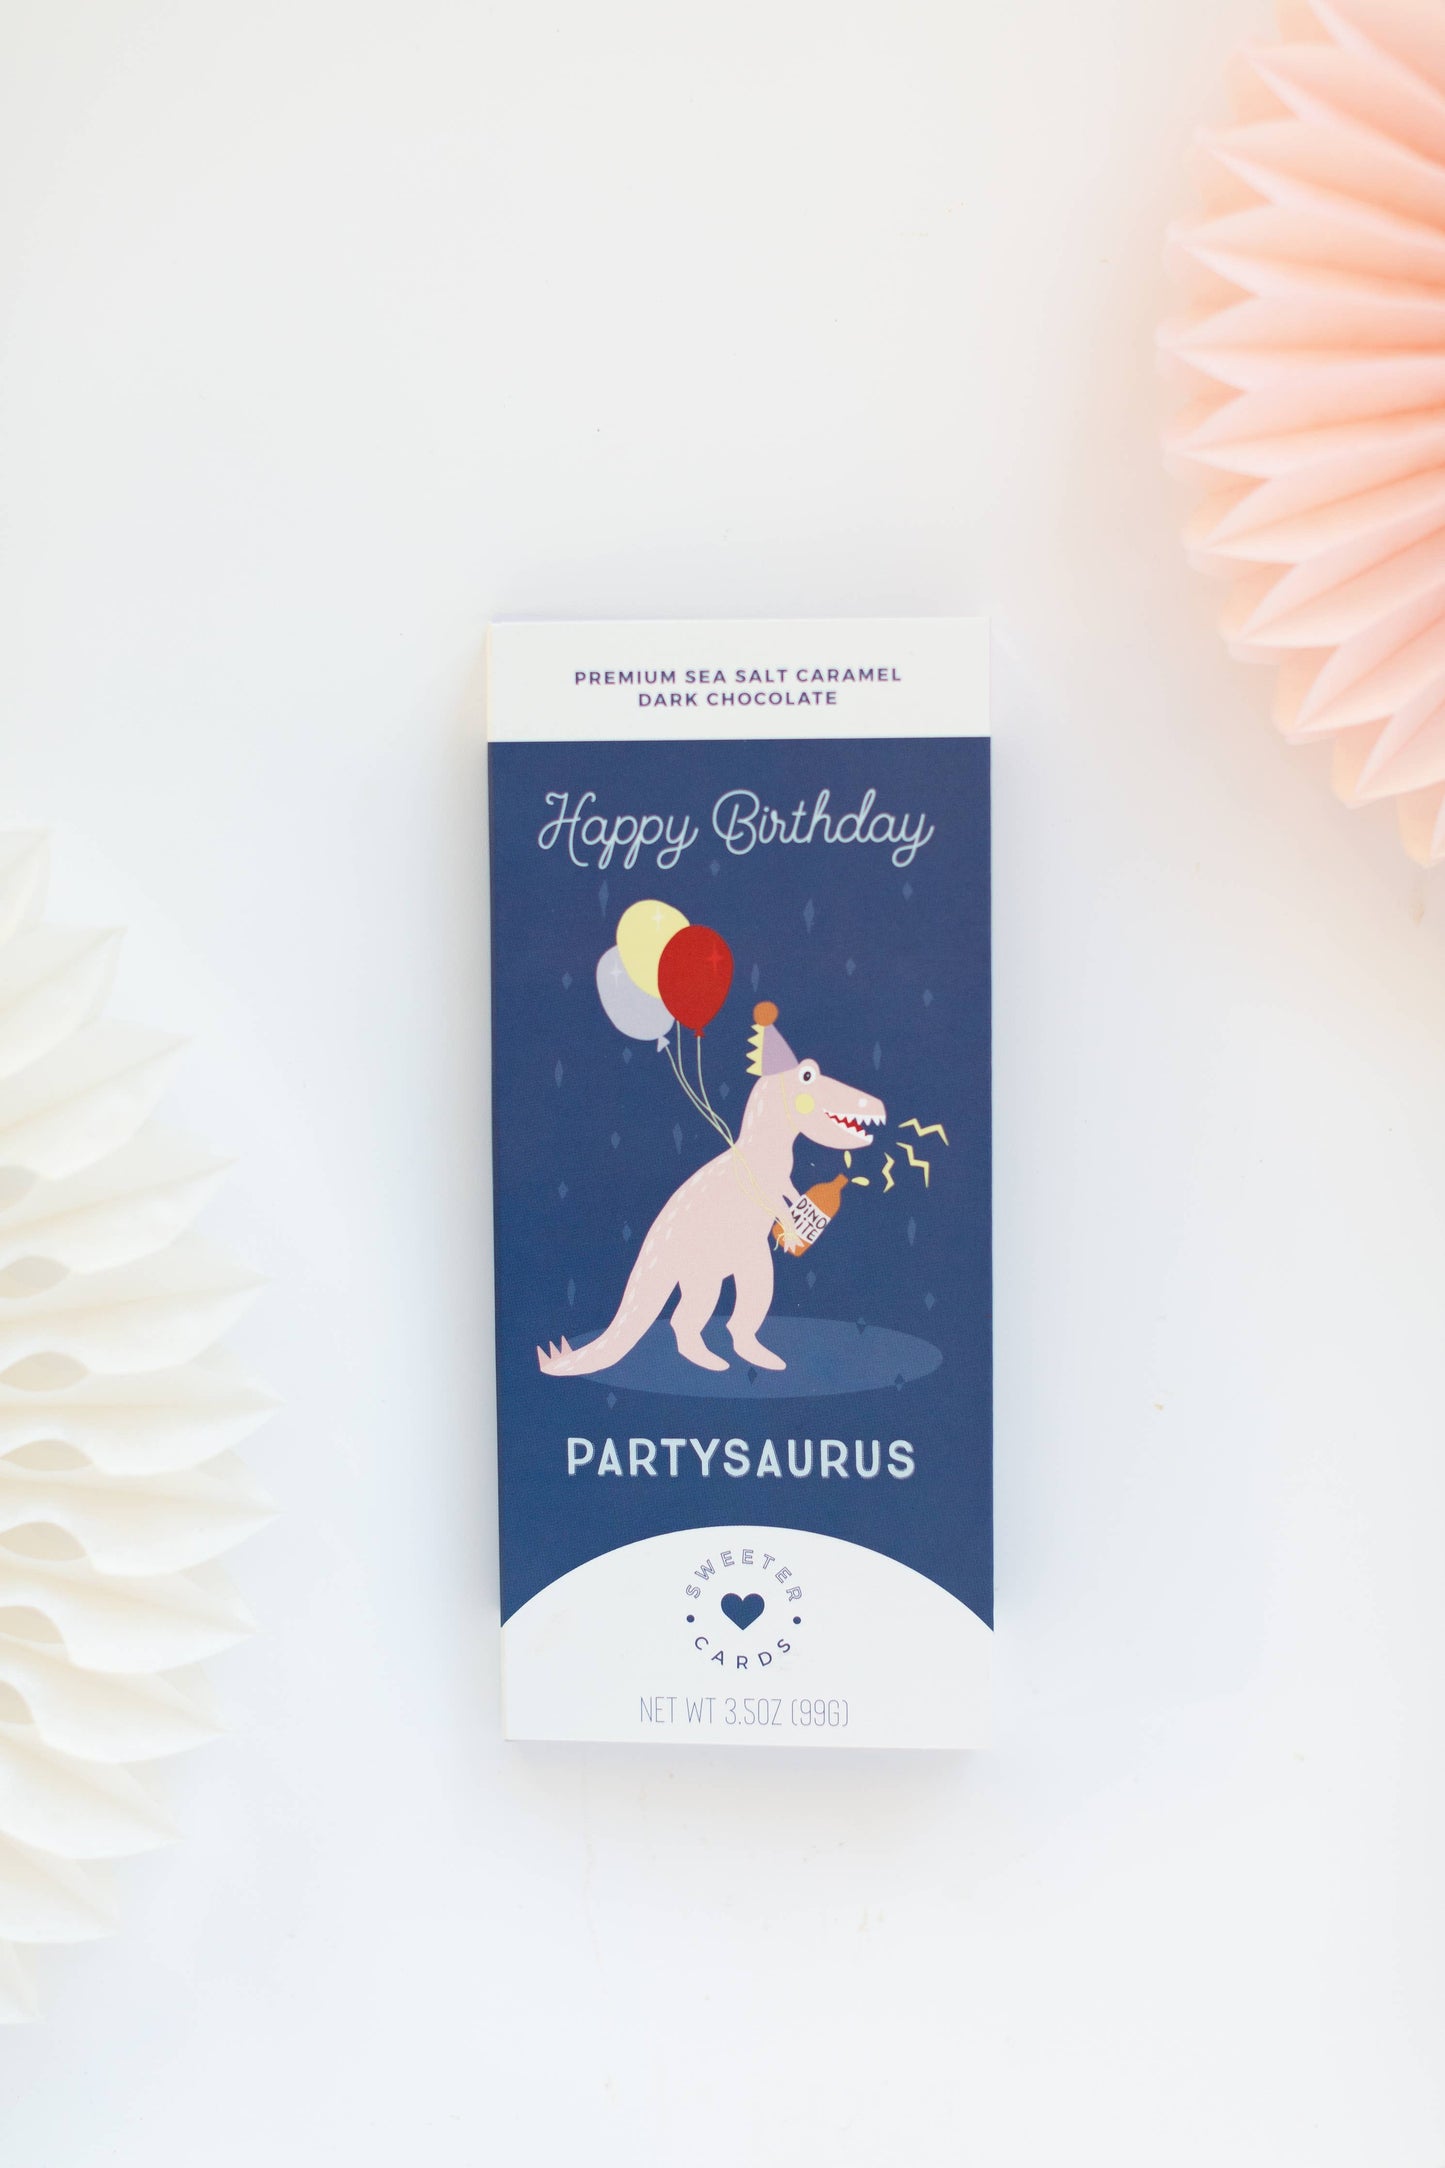 Happy Birthday Card w Chocolate Inside! (Partysaurus)